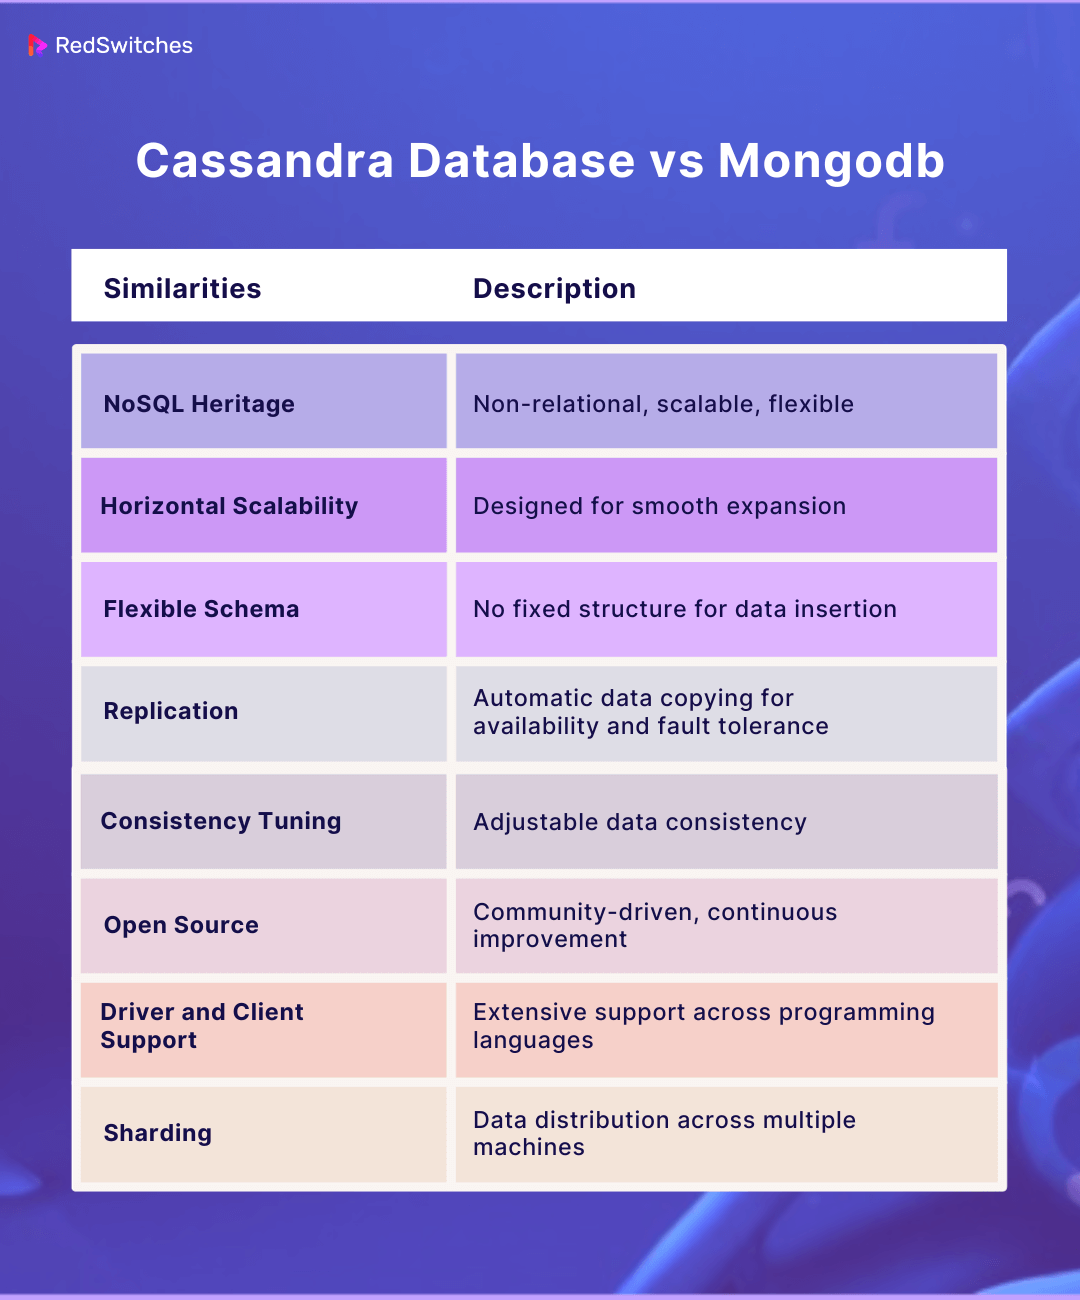 differences between Cassandra database vs Mongodb